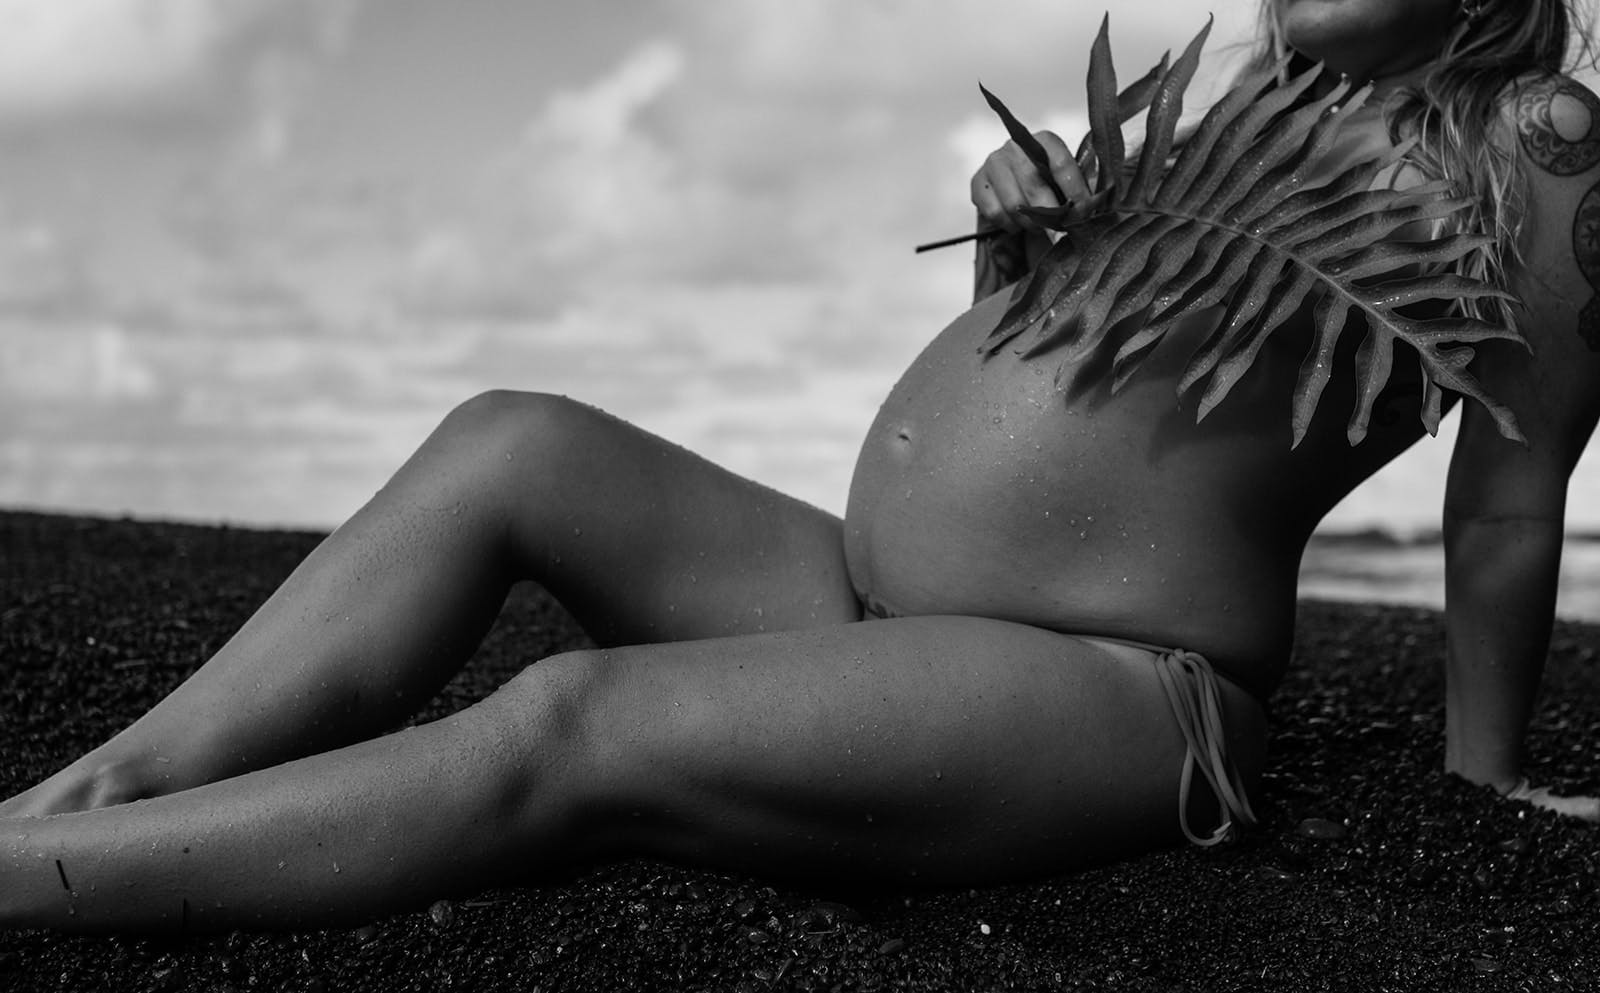 Hawaii maternity photography capturing your beautiful pregnancy glow